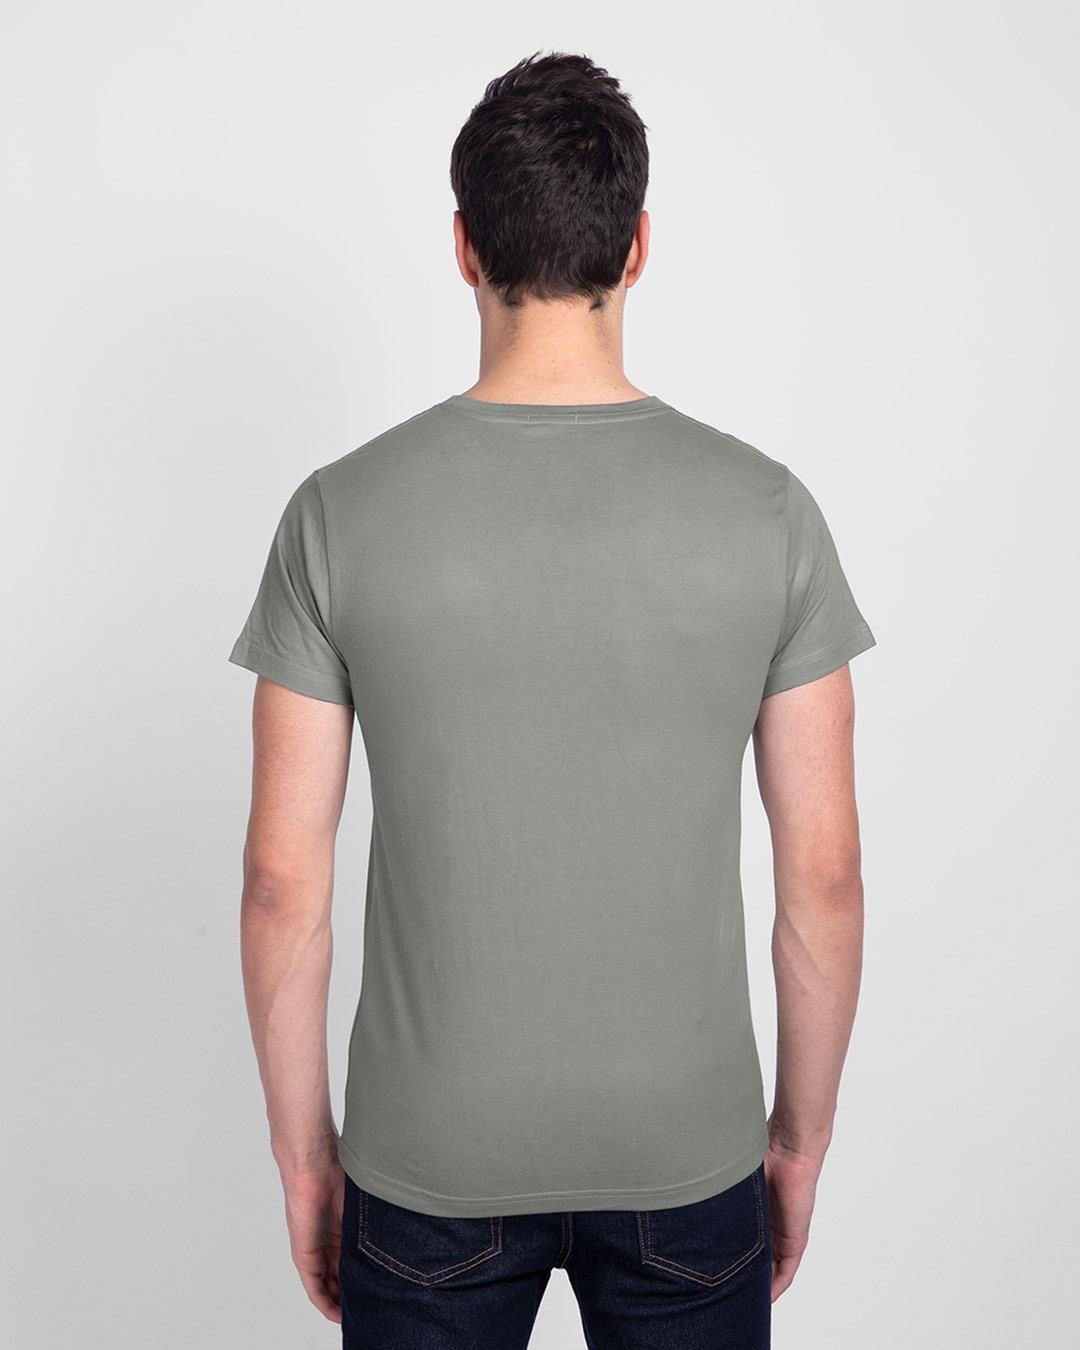 Shop Men's Plain Half Sleeve T-shirt Pack of 2(Black & Meteor Grey)